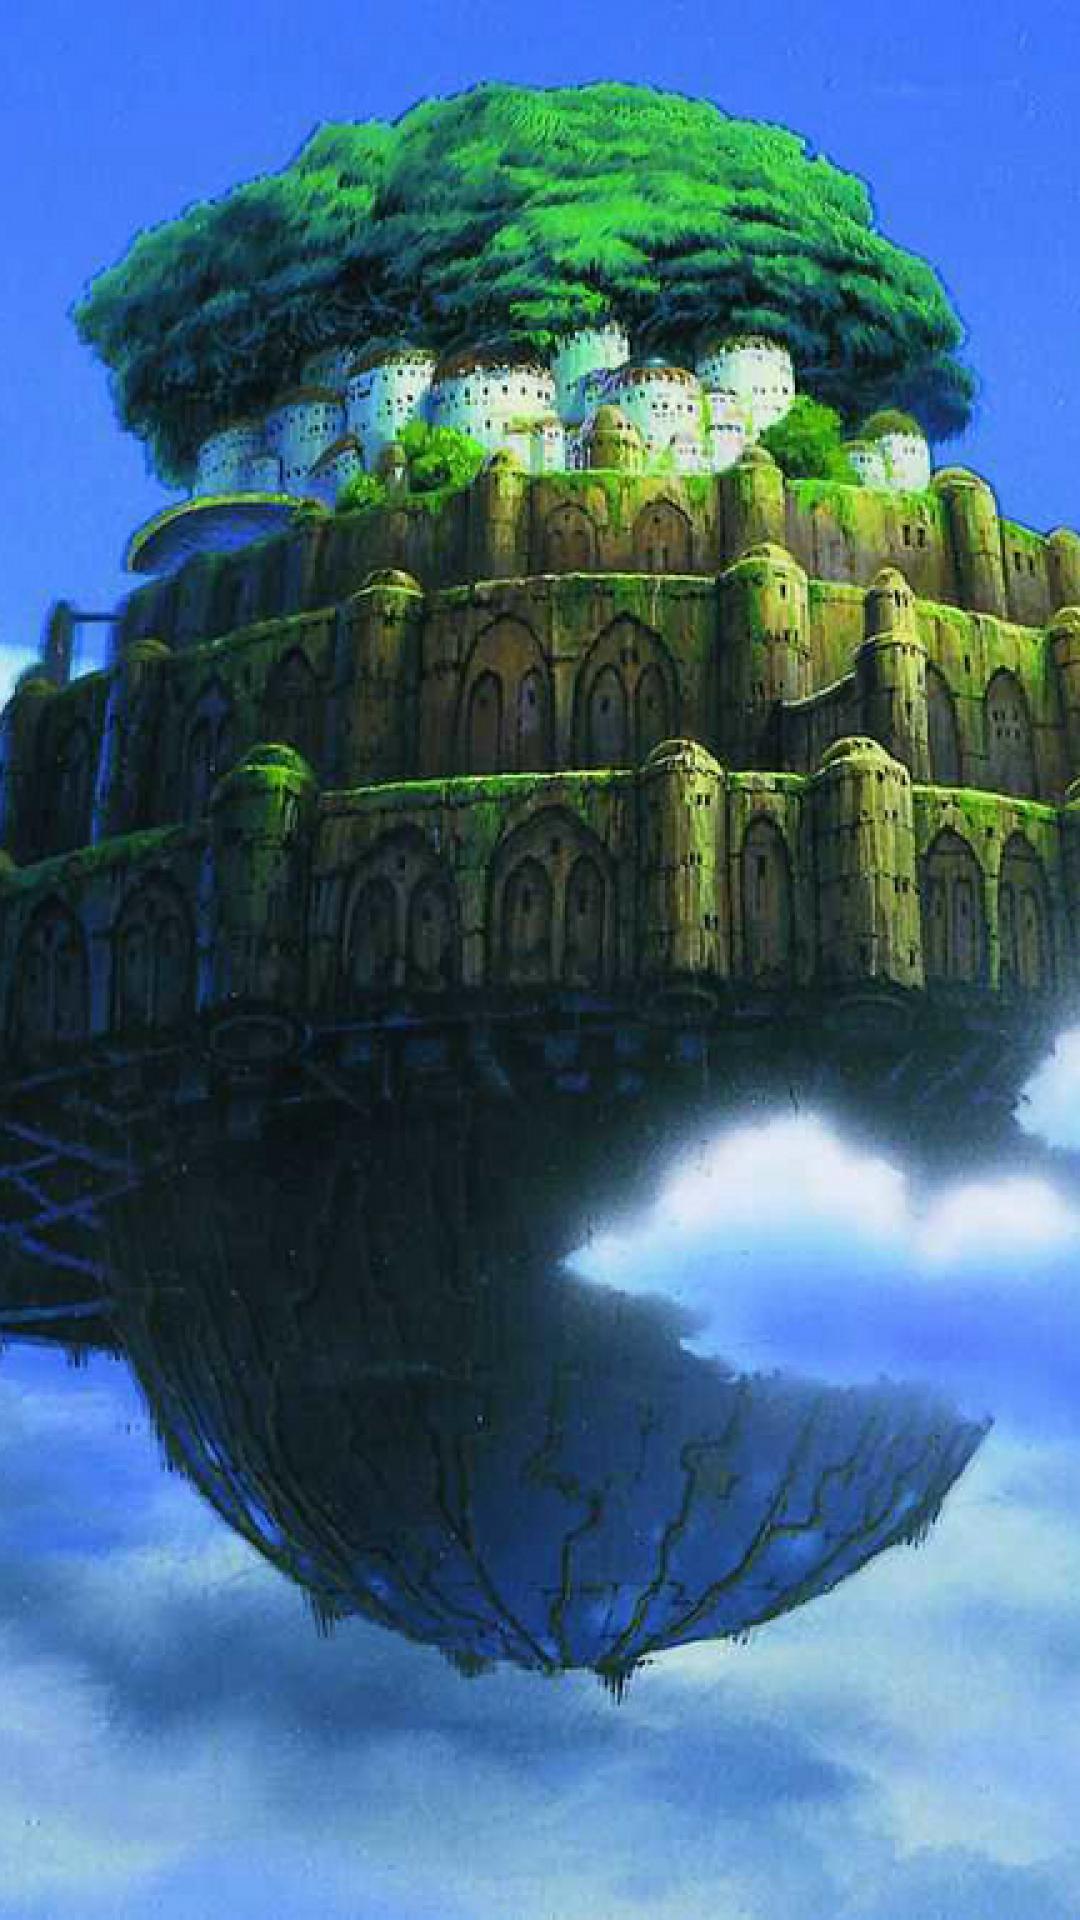 floating island laputa castle in the sky #olY4